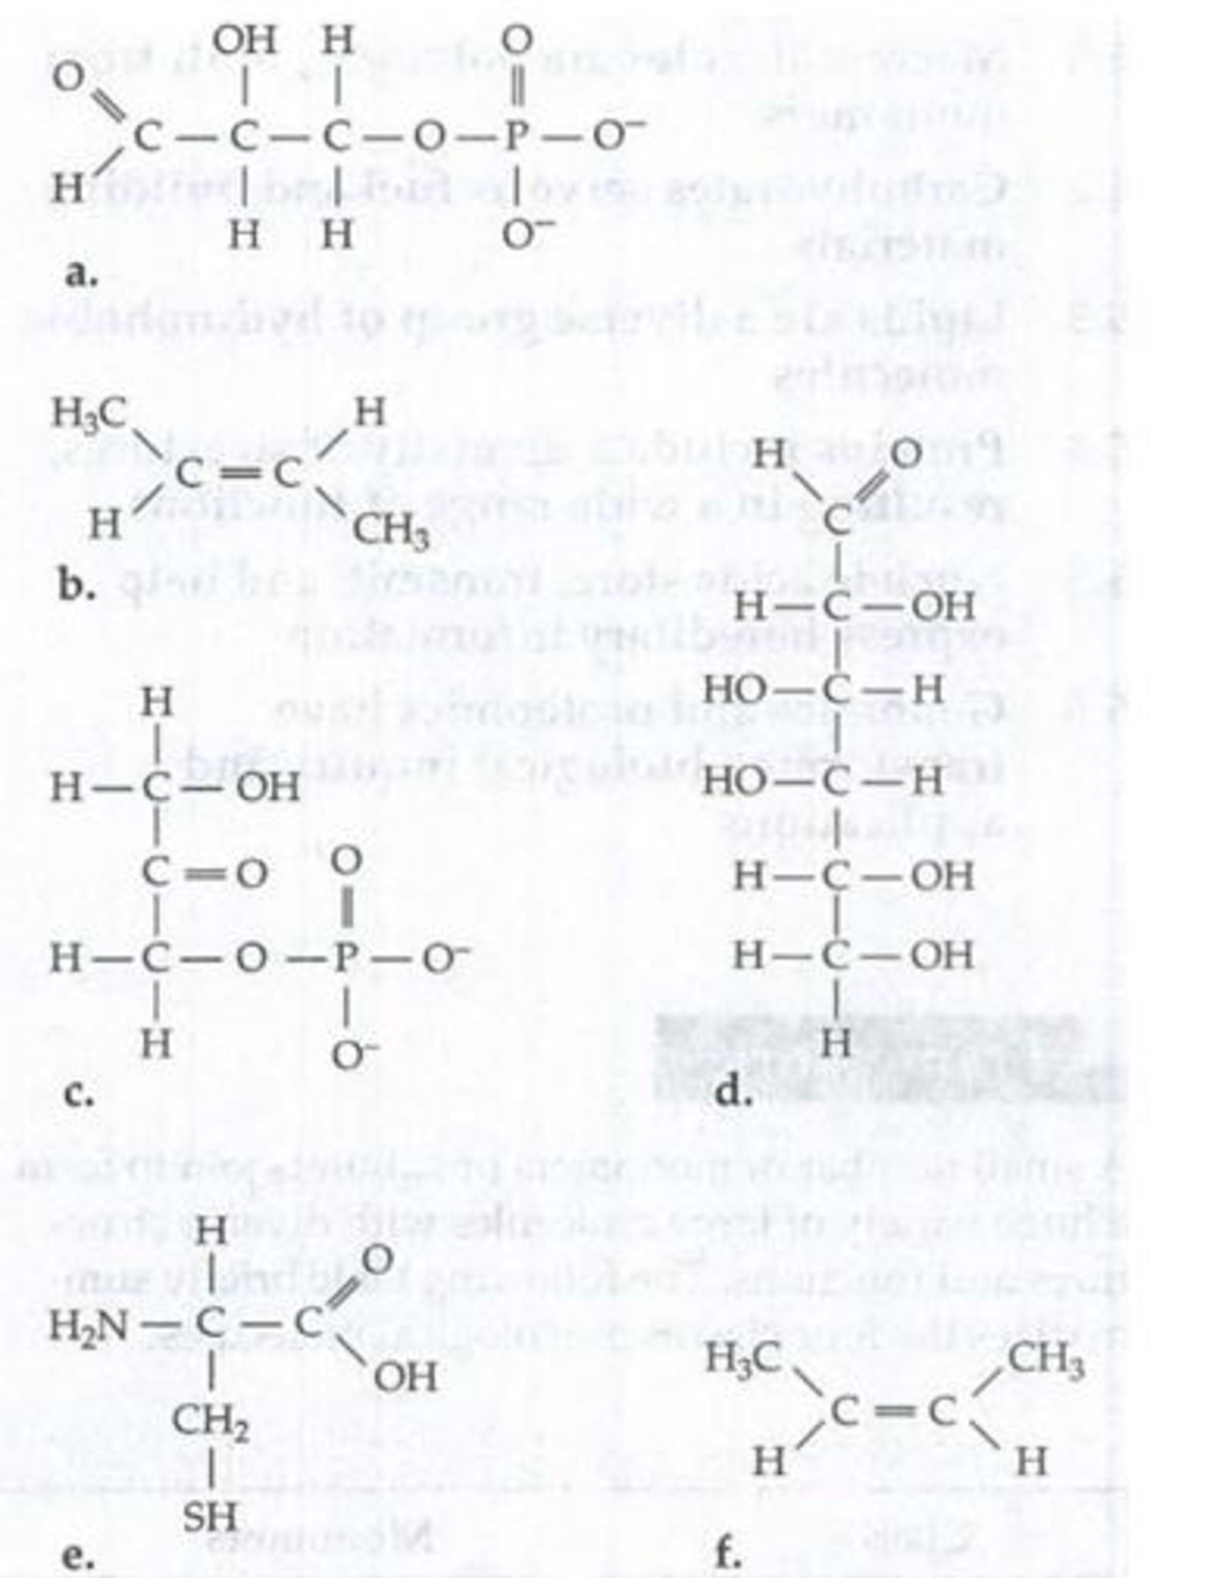 Chapter 4, Problem 8TYKM, amino acid 